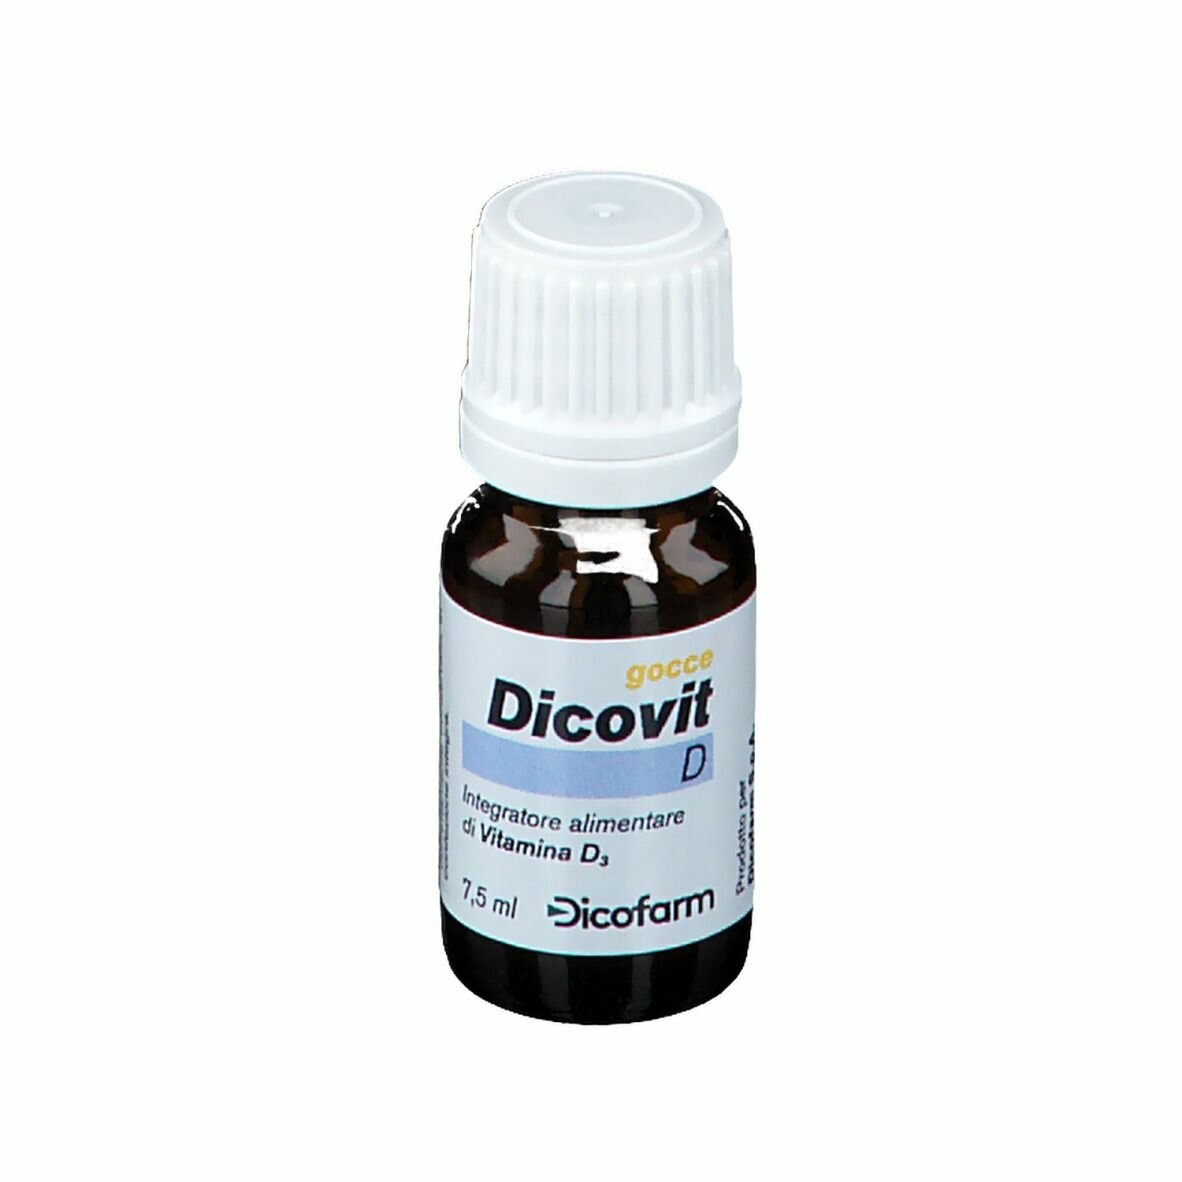 Dicofarm Dicovit D Integratore Vitamina D3  Gocce 7,5 Ml img